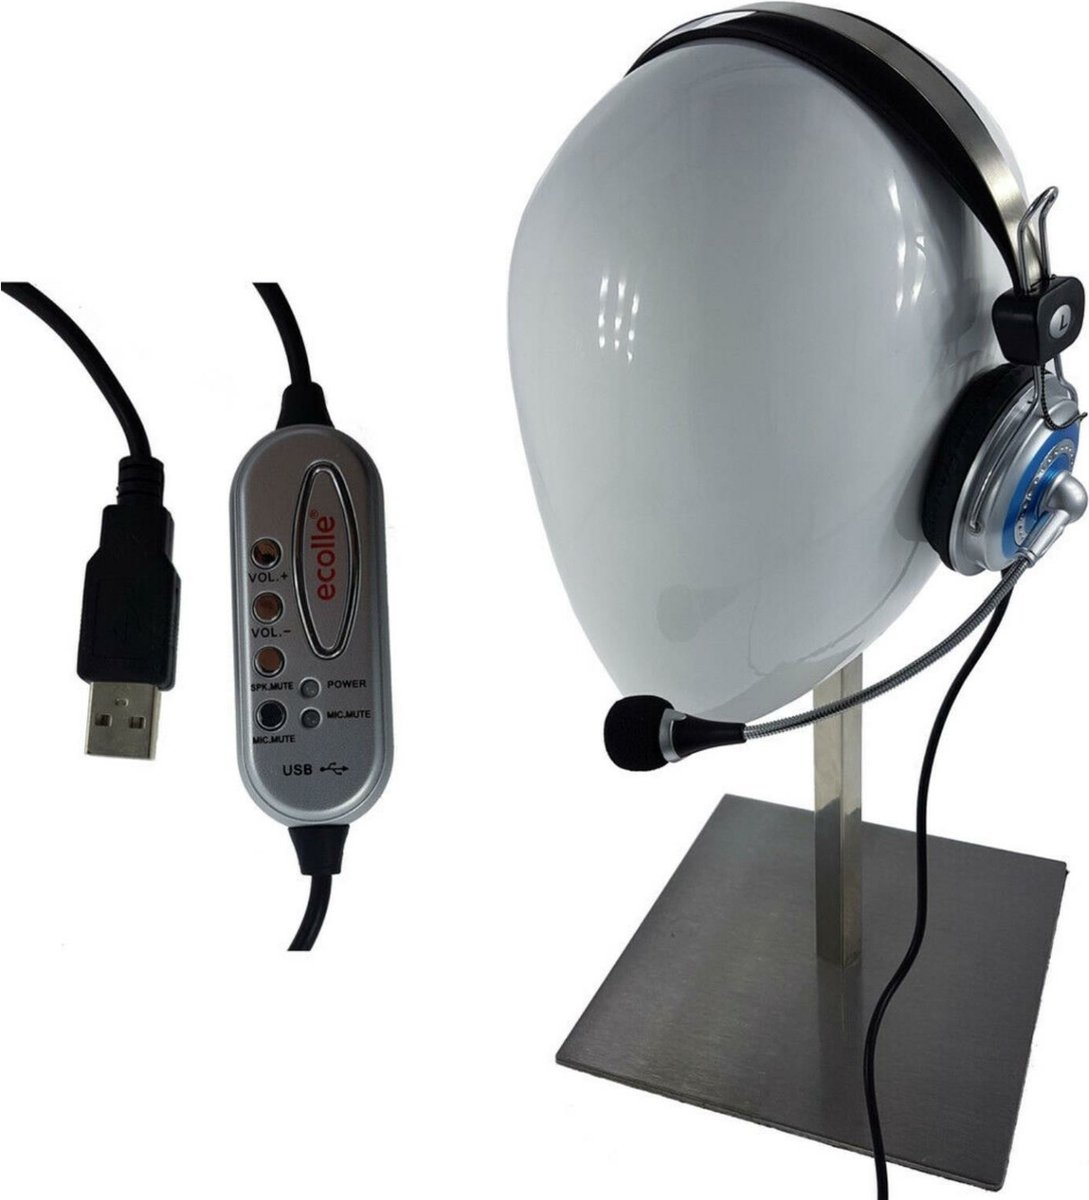 Ecolle - Bedrade stereo USB-headset voor callcenters